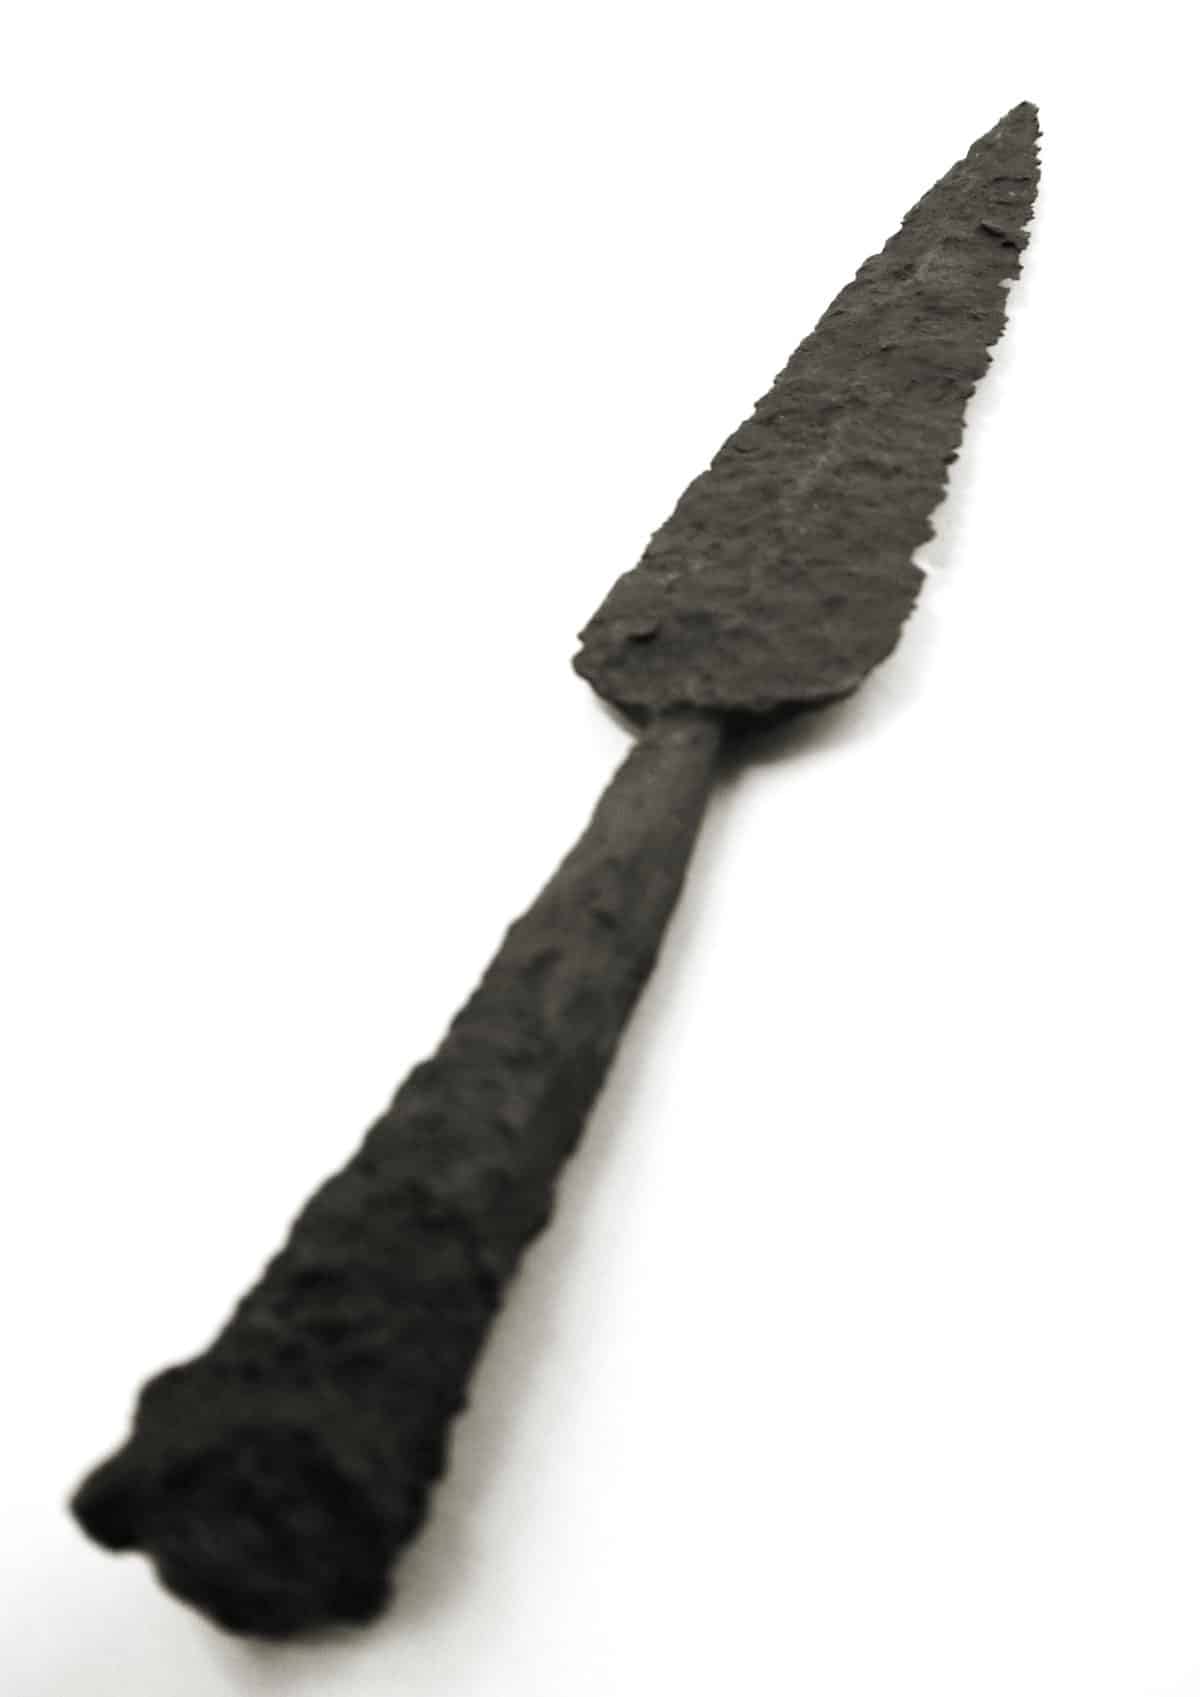 Anglo Saxon 6 spearhead